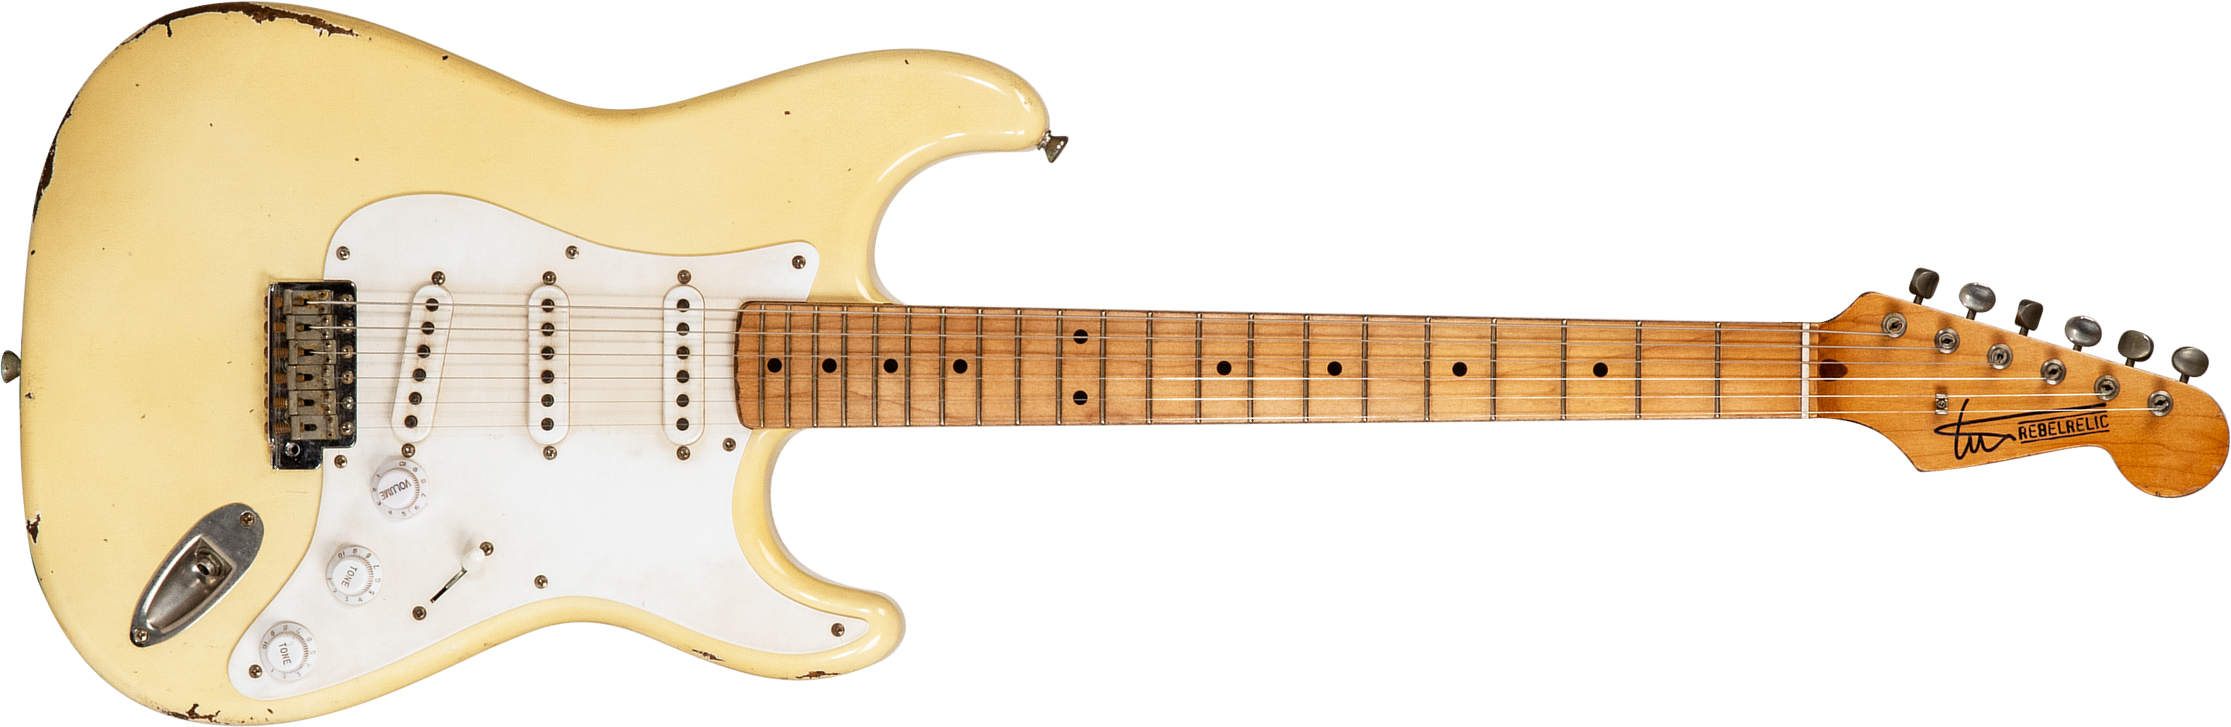 Rebelrelic S-series 55 3s Trem Mn #62191 - Light Aged Banana - E-Gitarre in Str-Form - Main picture